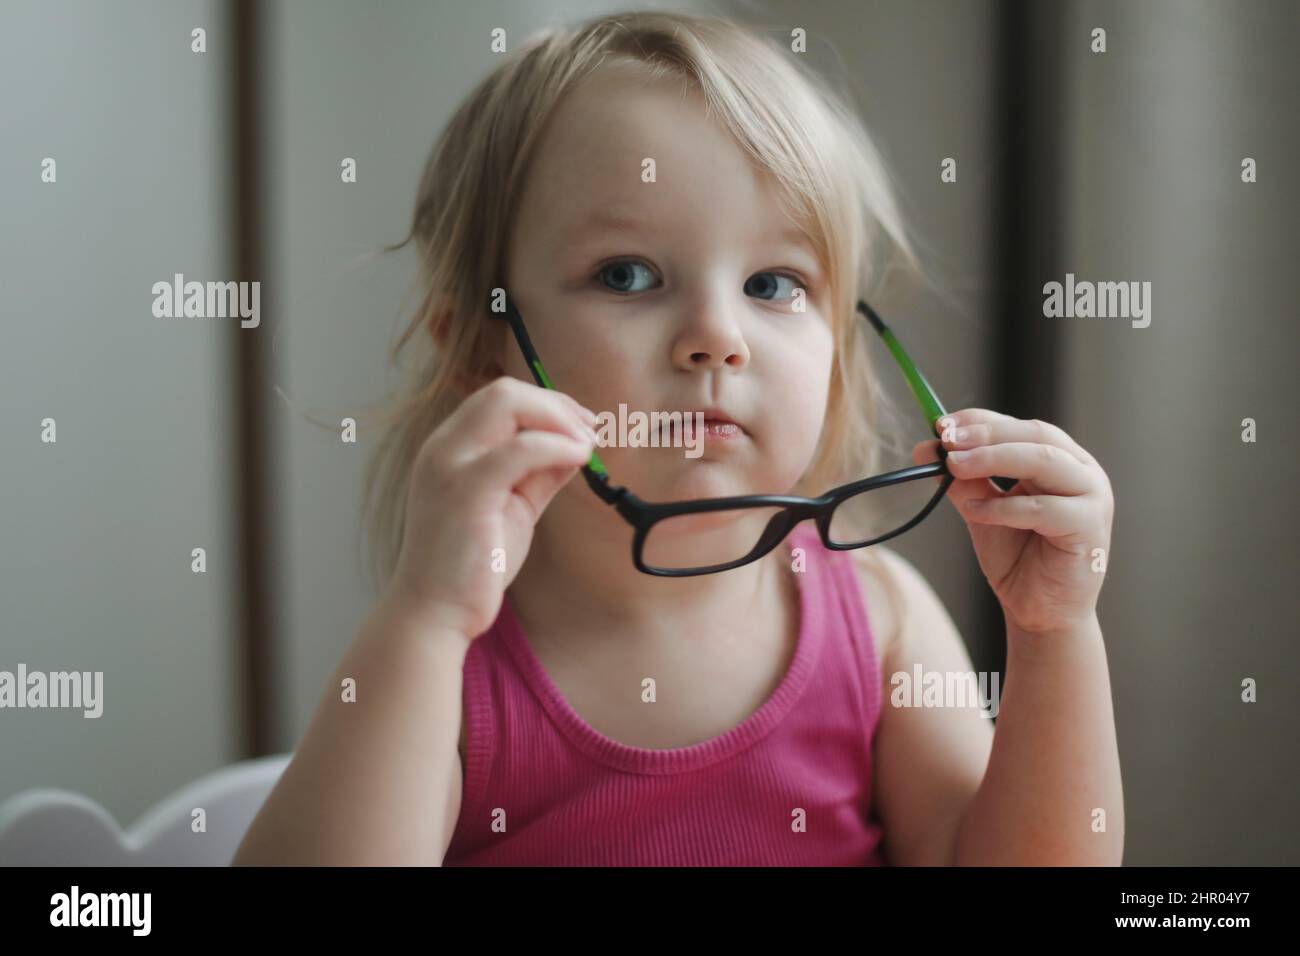 portrait of a little funny girl in eyeglasses Stock Photo